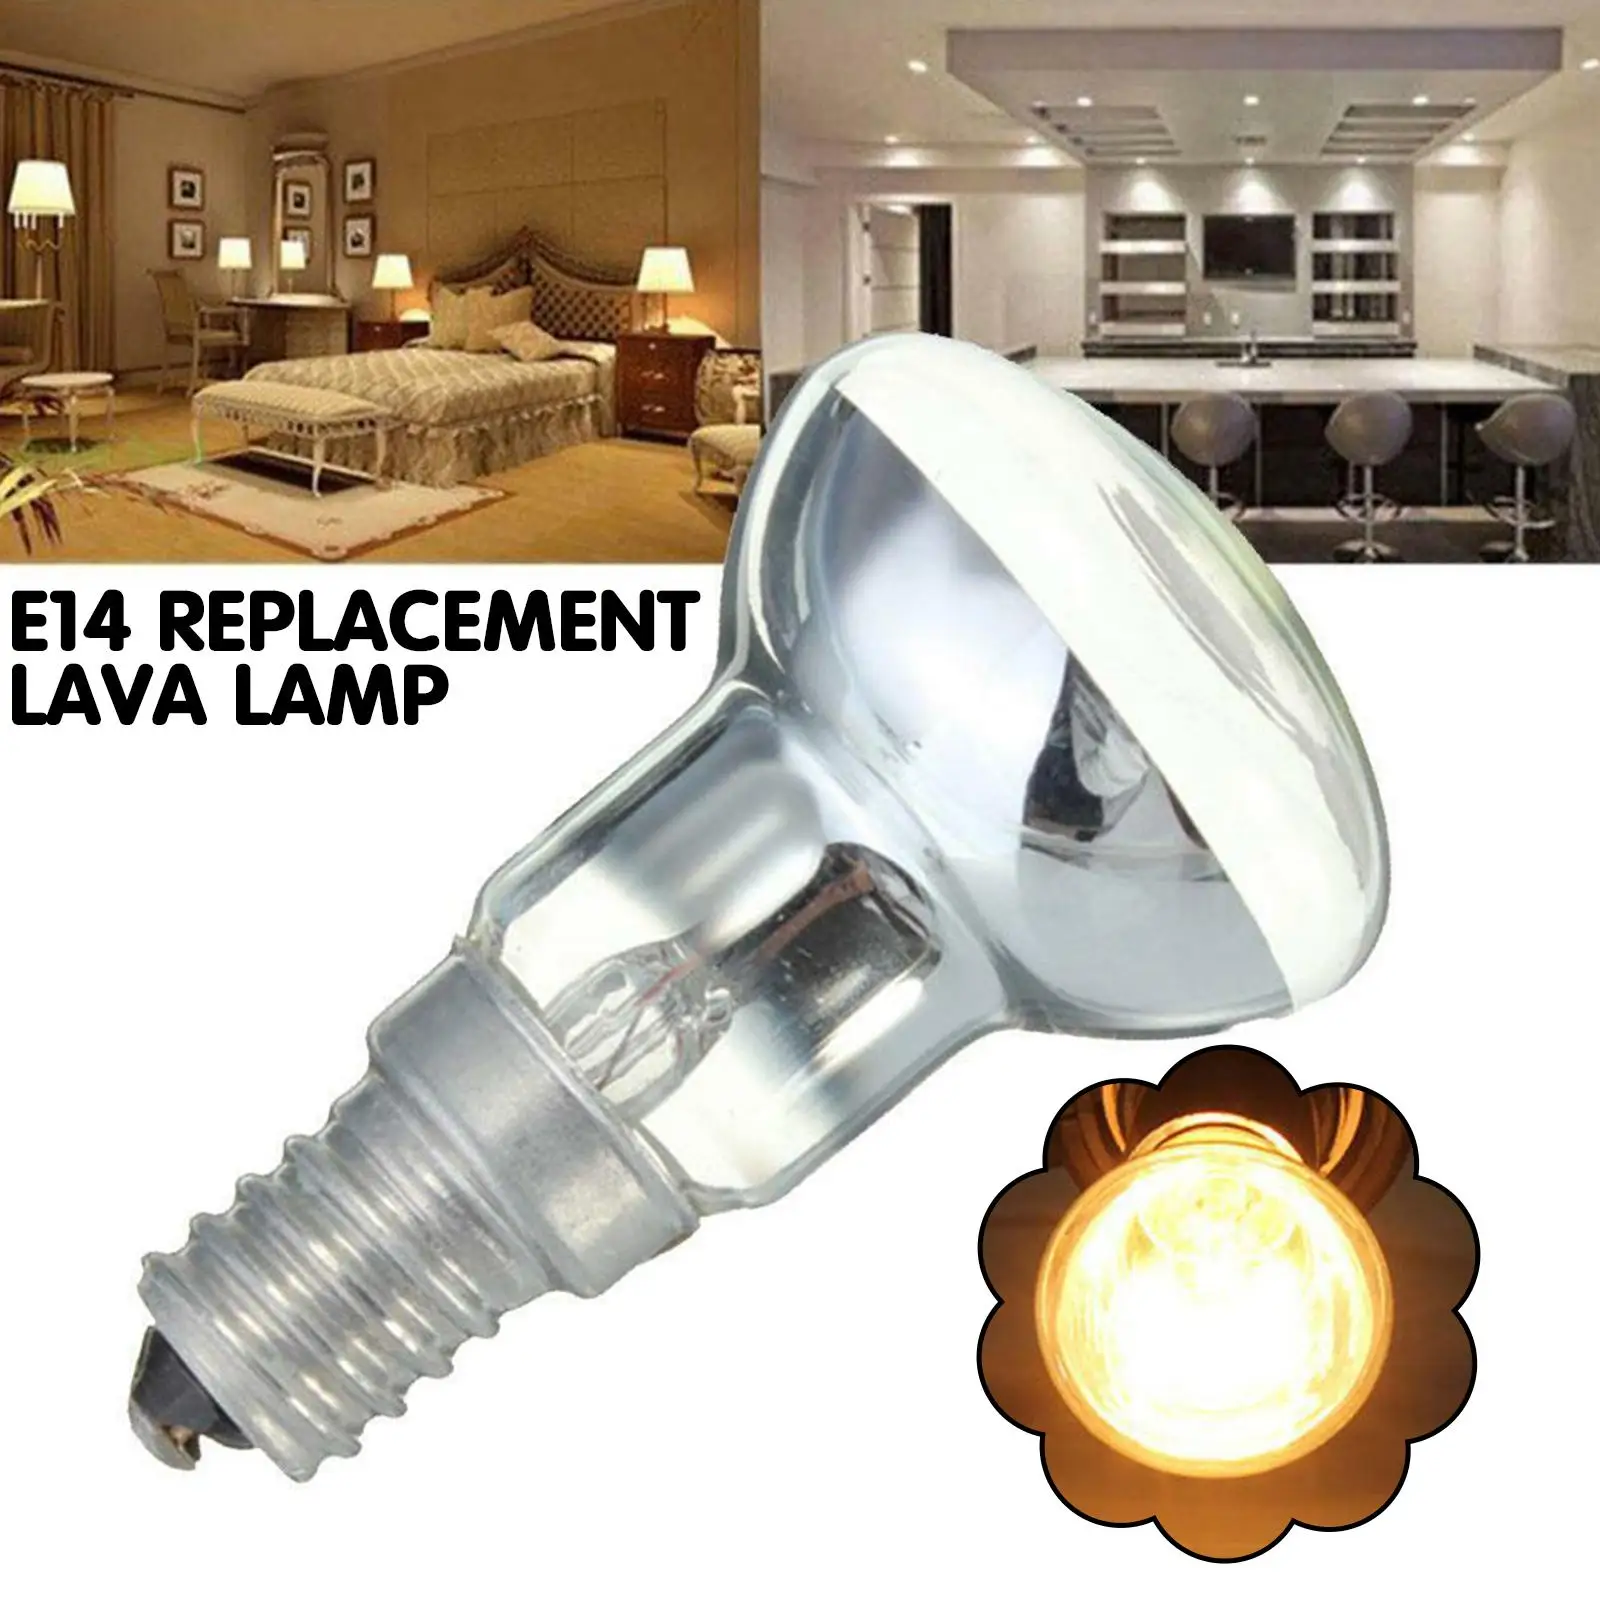 

E14 R39 30w Replacement Lava Lamp Spotlight Screw In Lava Bulbs Incandescent Bulbs Reflector Clear Bulb Spot Light Light Li P8k9